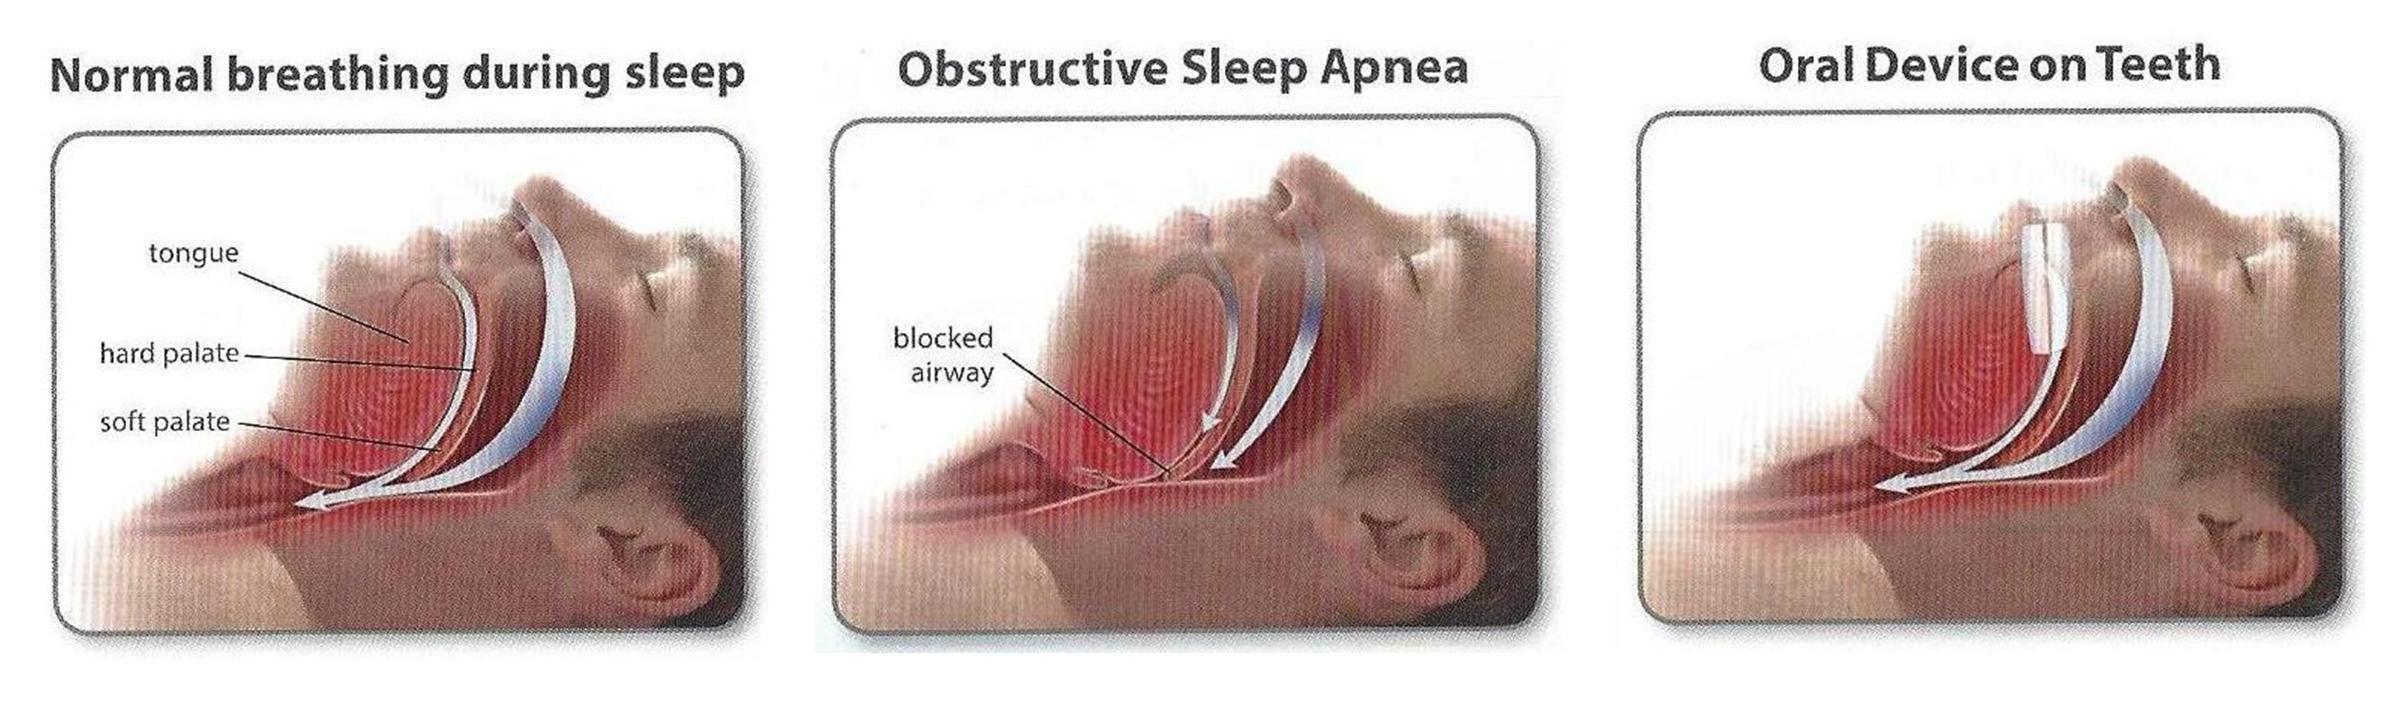 Sleep apnea process illustrator